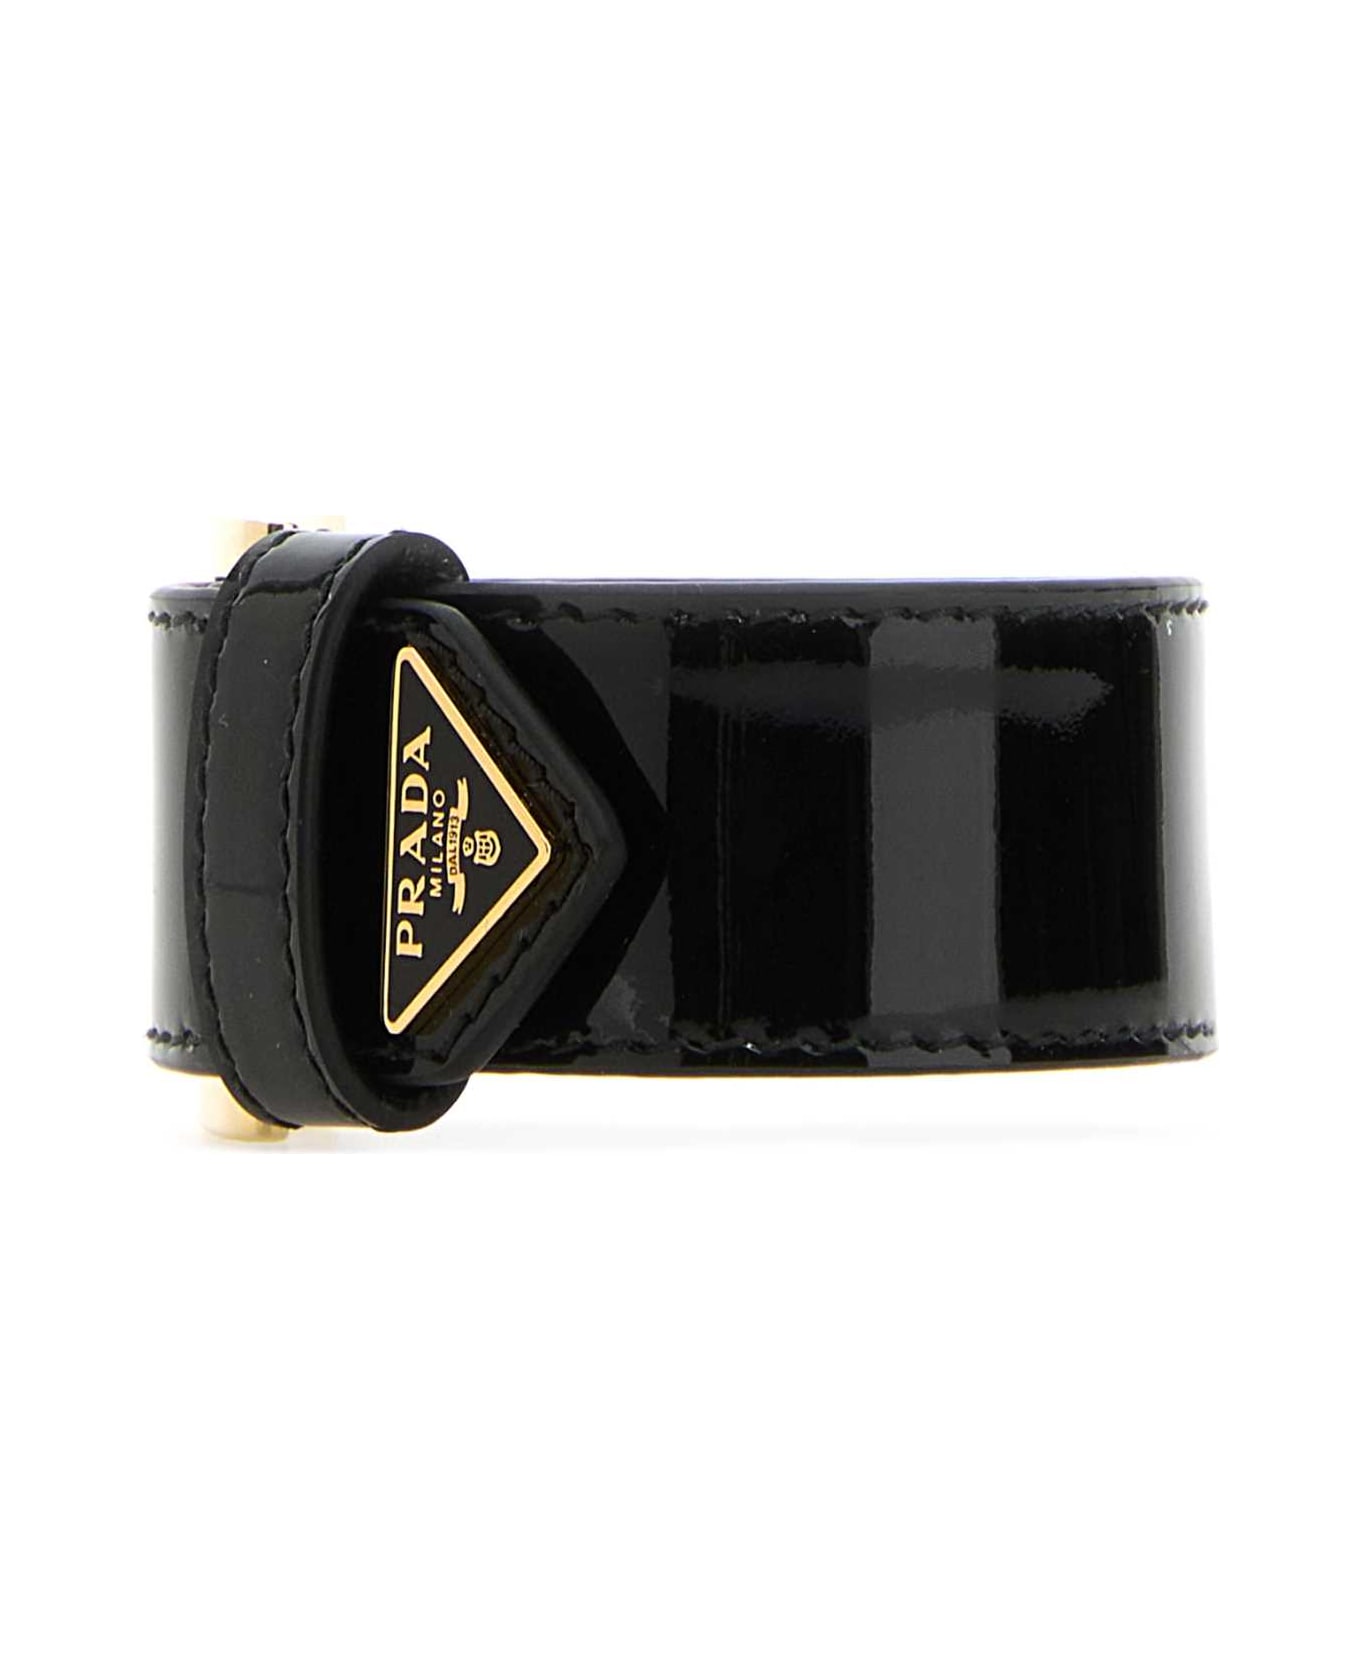 Prada Black Leather Bracelet - NEROR